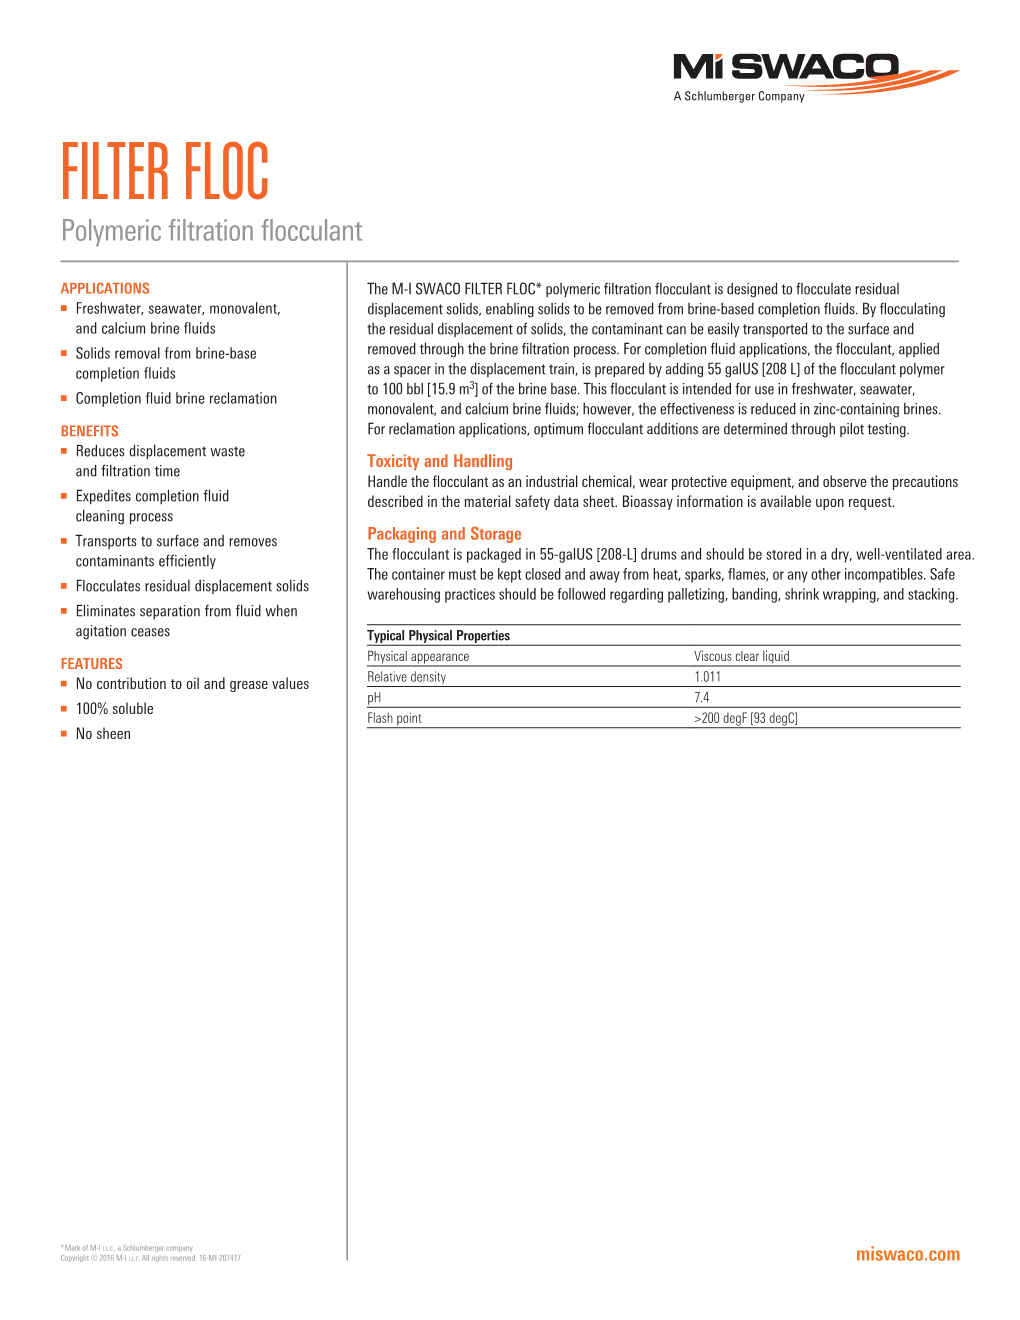 FILTER FLOC Polymeric Filtration Flocculant